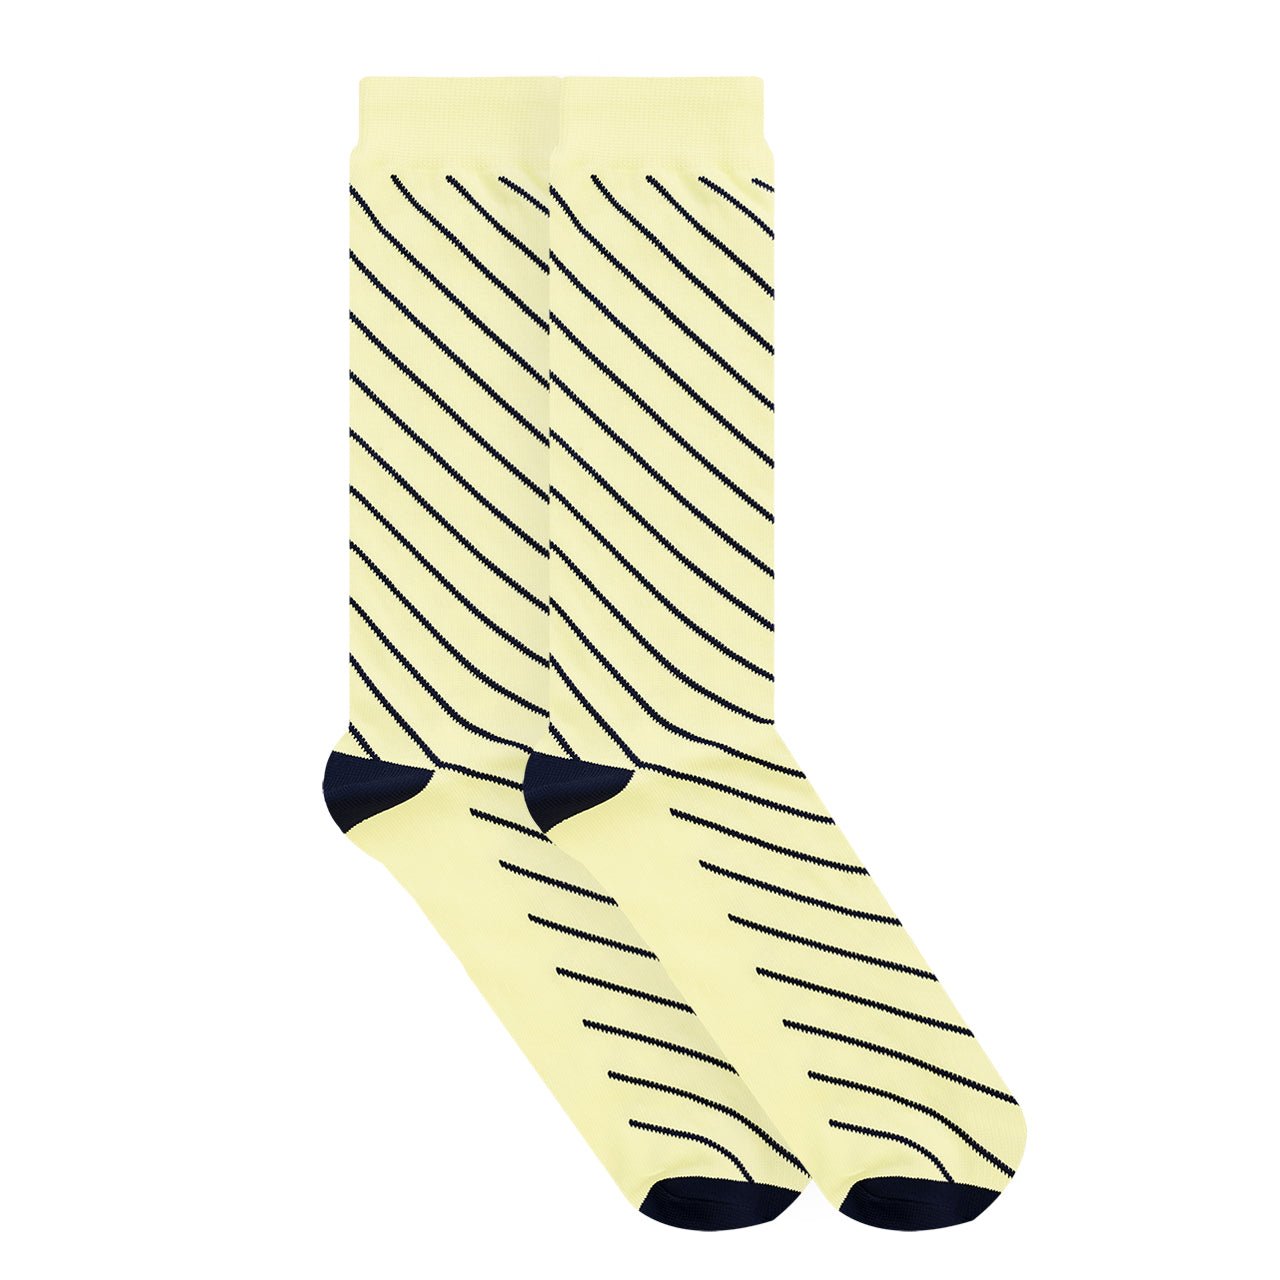 calcetin-lineas-amarillo119accesoriosskunk-socks-188113.jpg